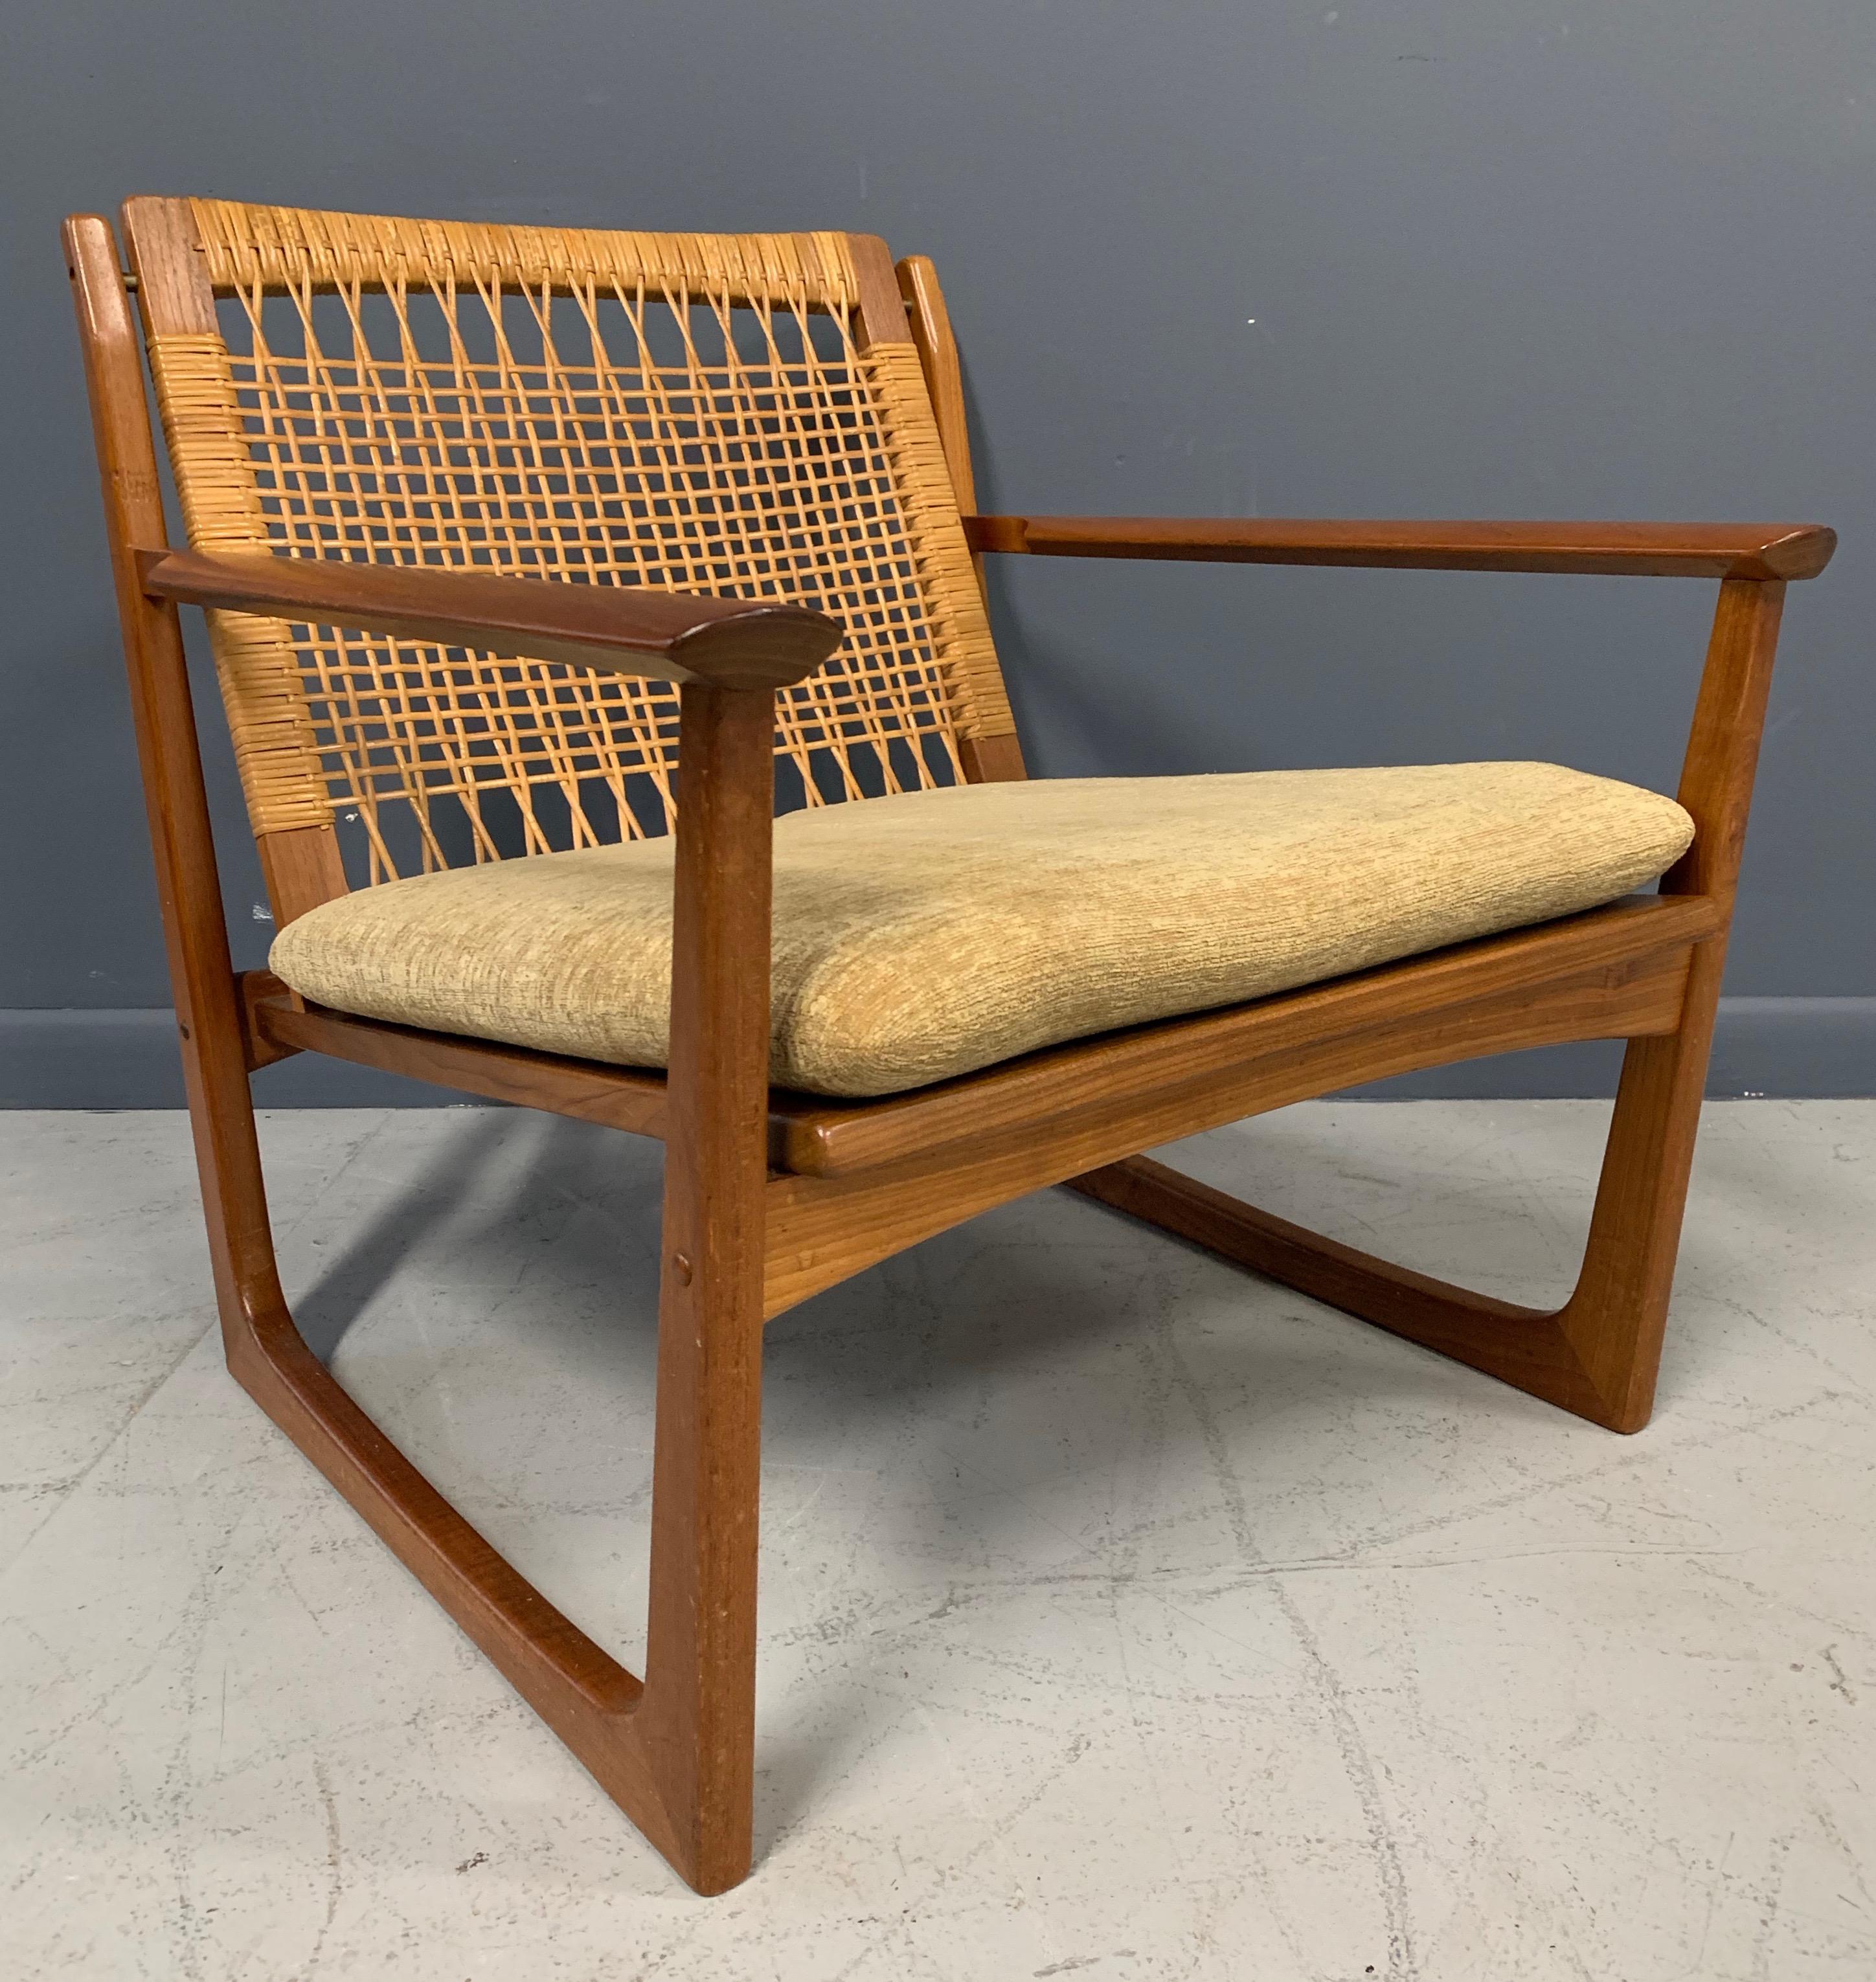 Teak and cane chair designed by Hans Olsen, produced by Juul Kristensen in Denmark.